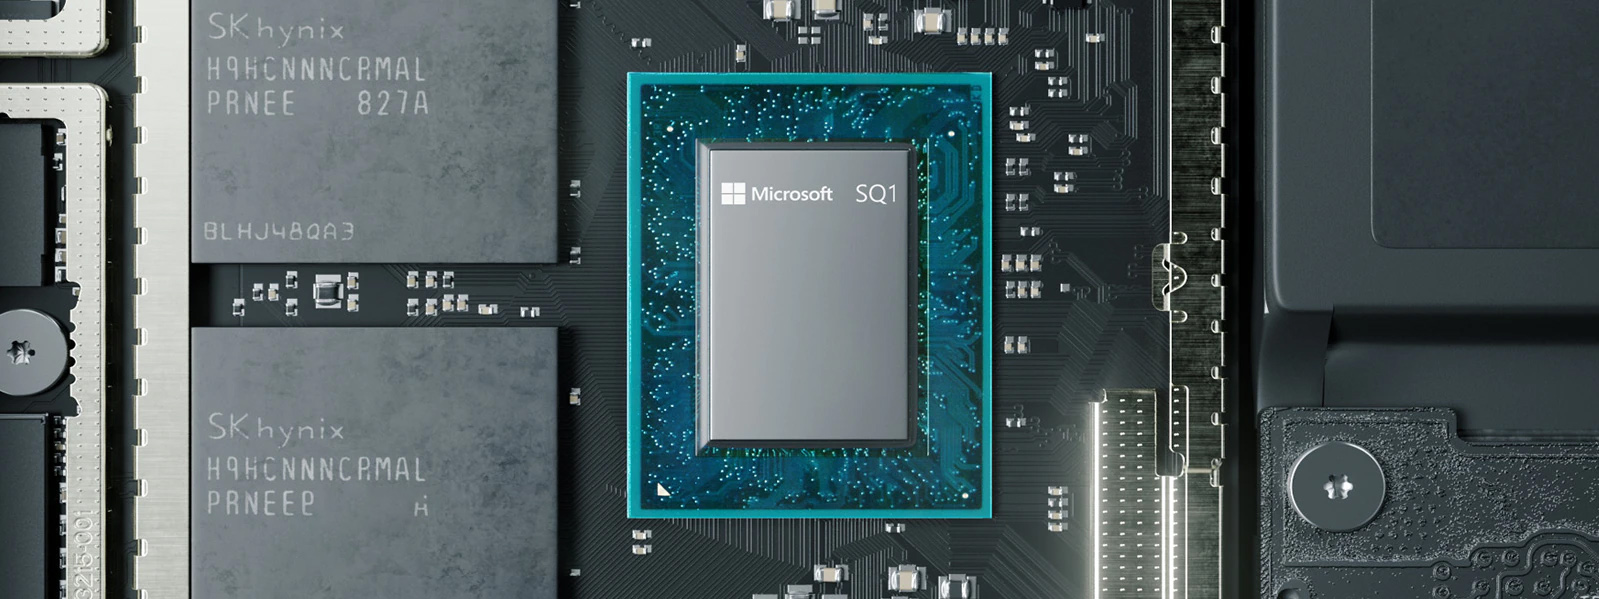 Microsoft SQ1 ARM processor